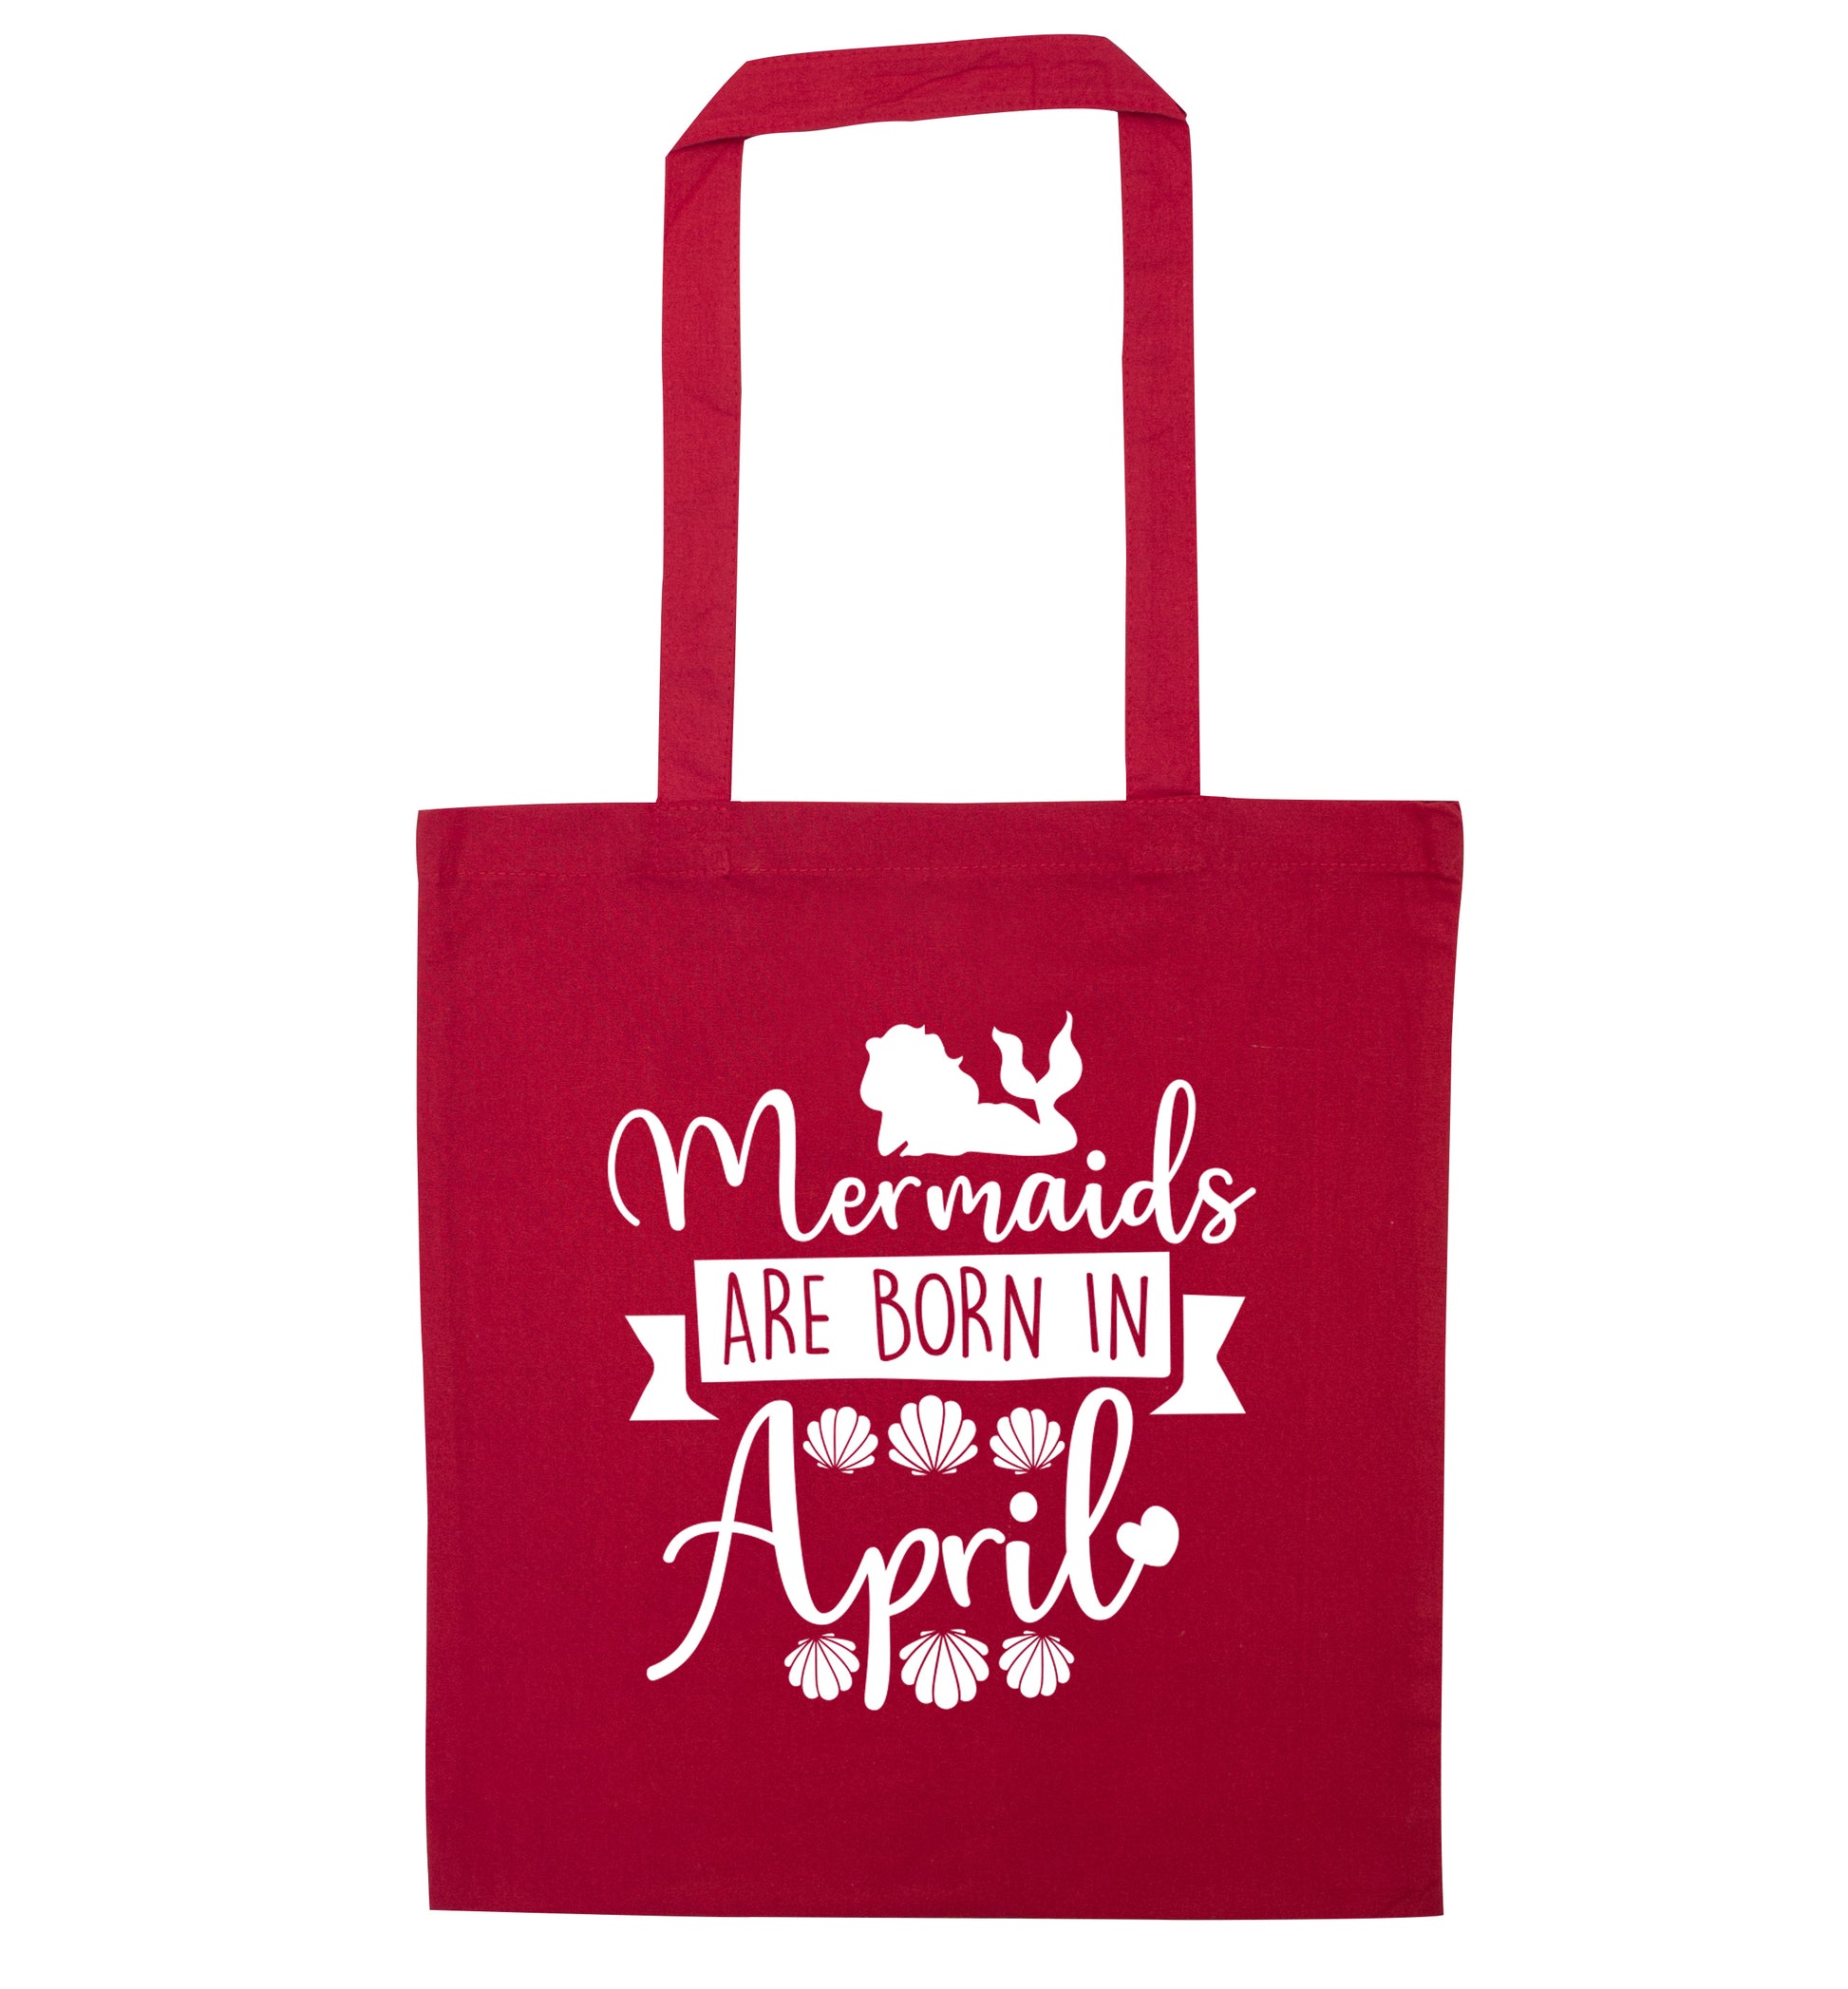 Mermaids are born in April red tote bag